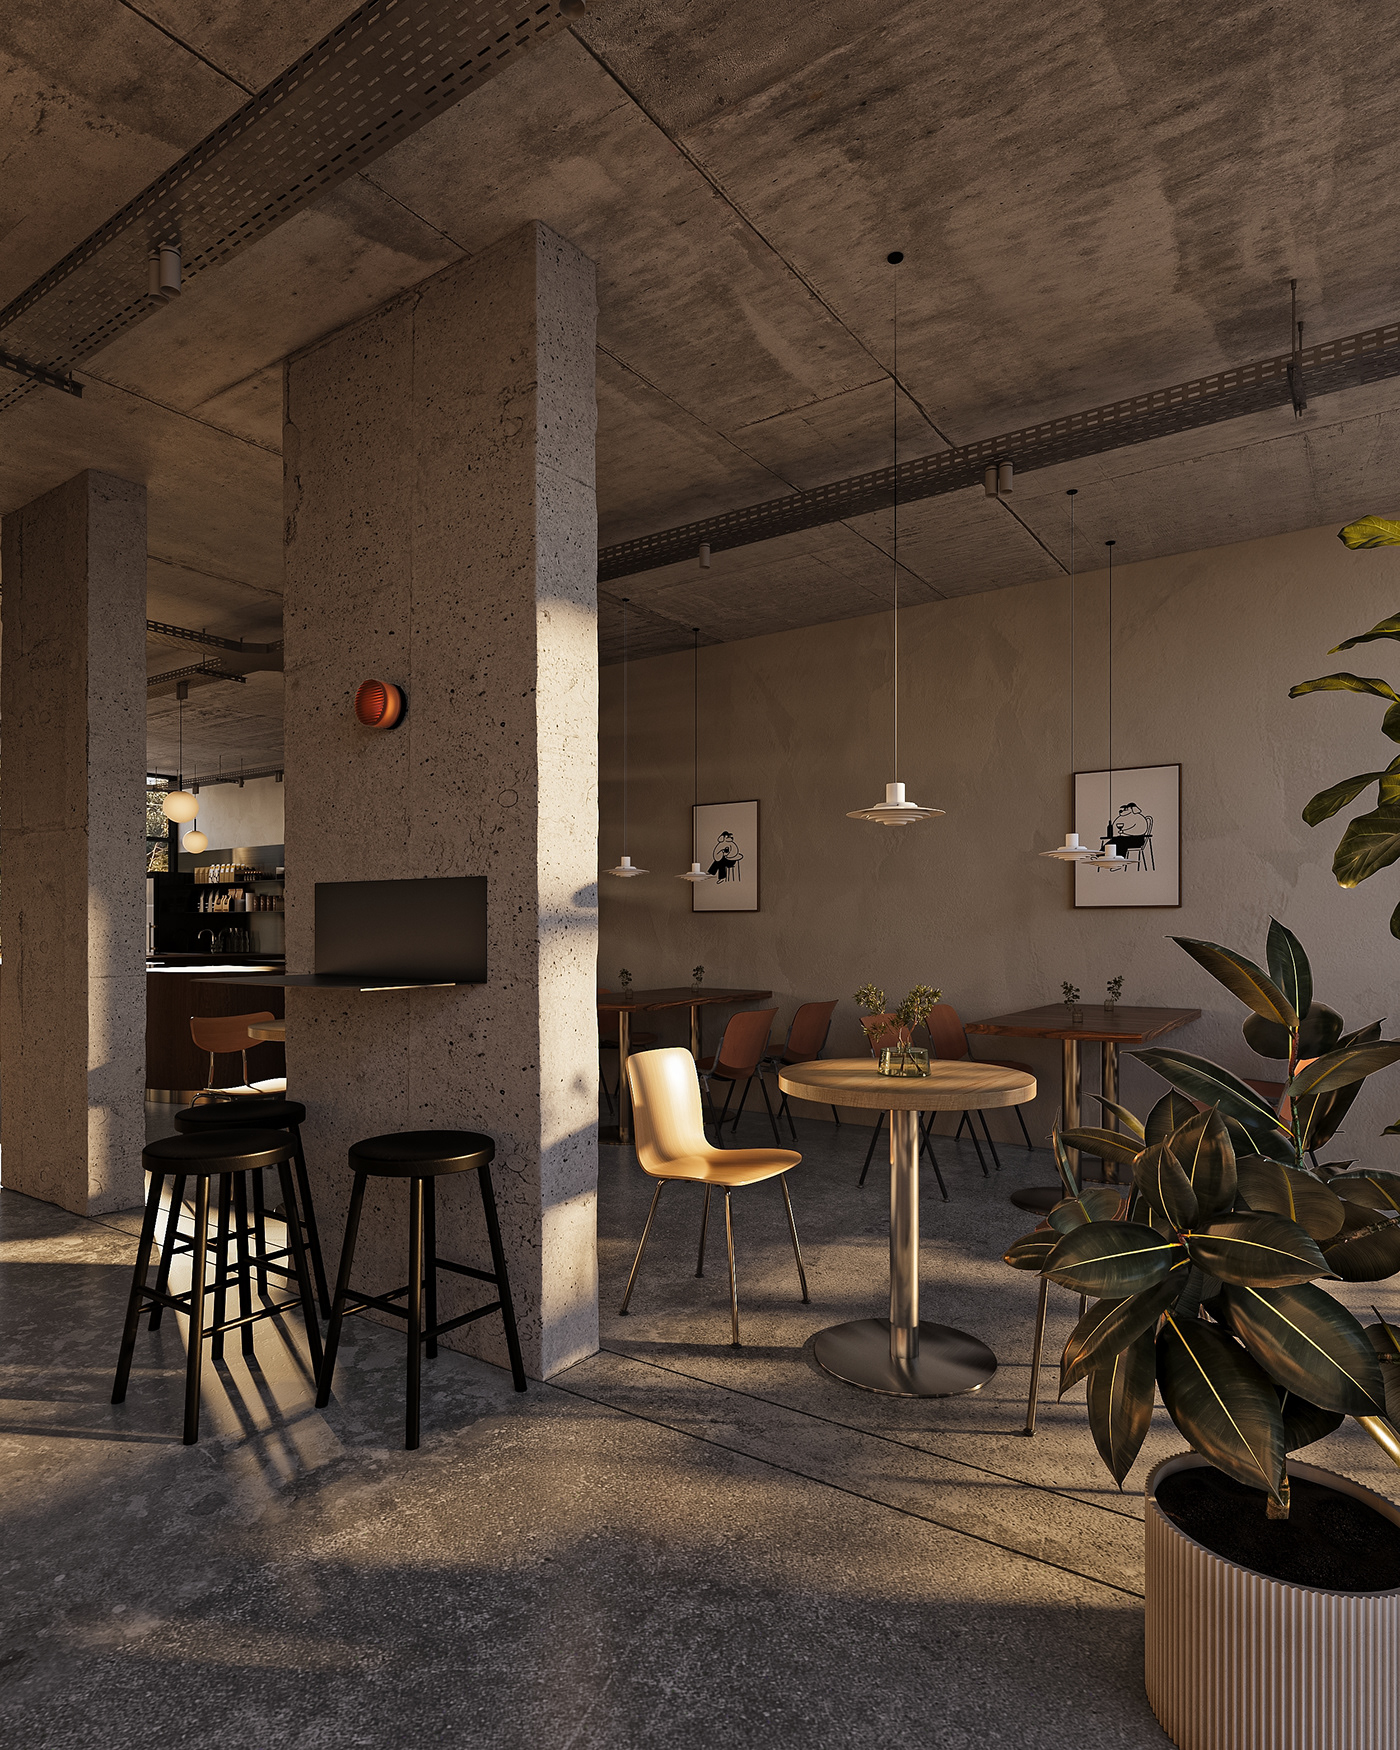 cafe revit corona render  visualization archviz coffee shop 3dsmax CoronaRender  interior design  interiordesigner